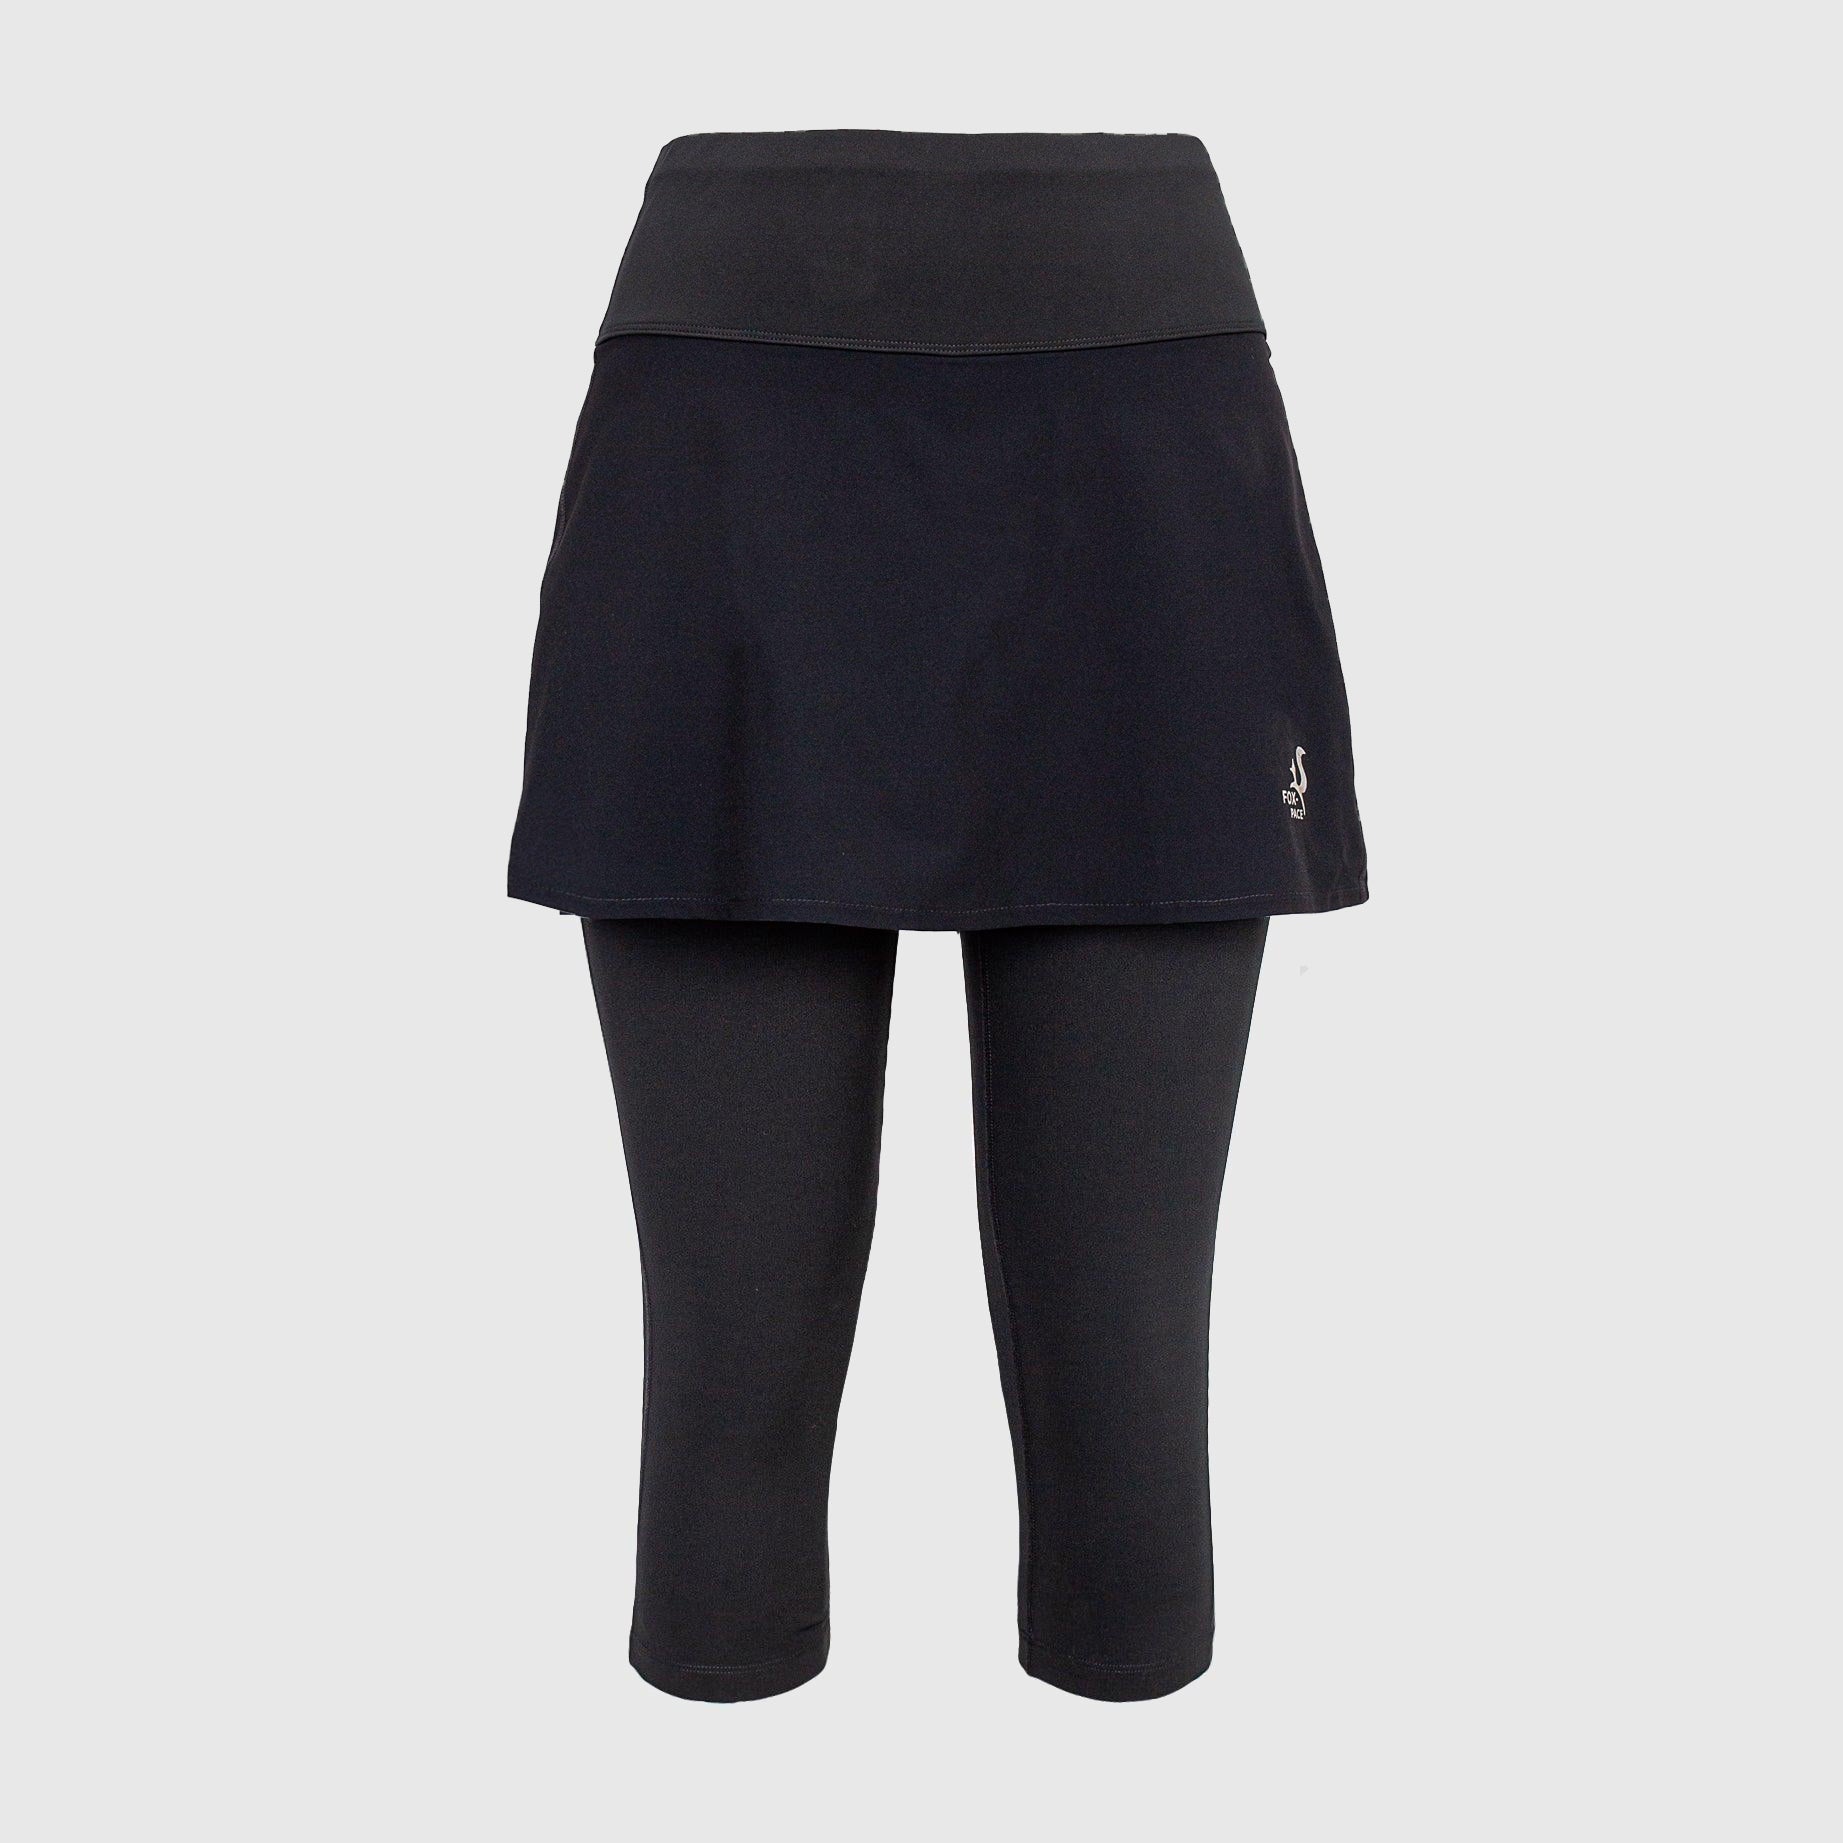 Lotta Breeze Capri Skirt XS only - Skirt Sports